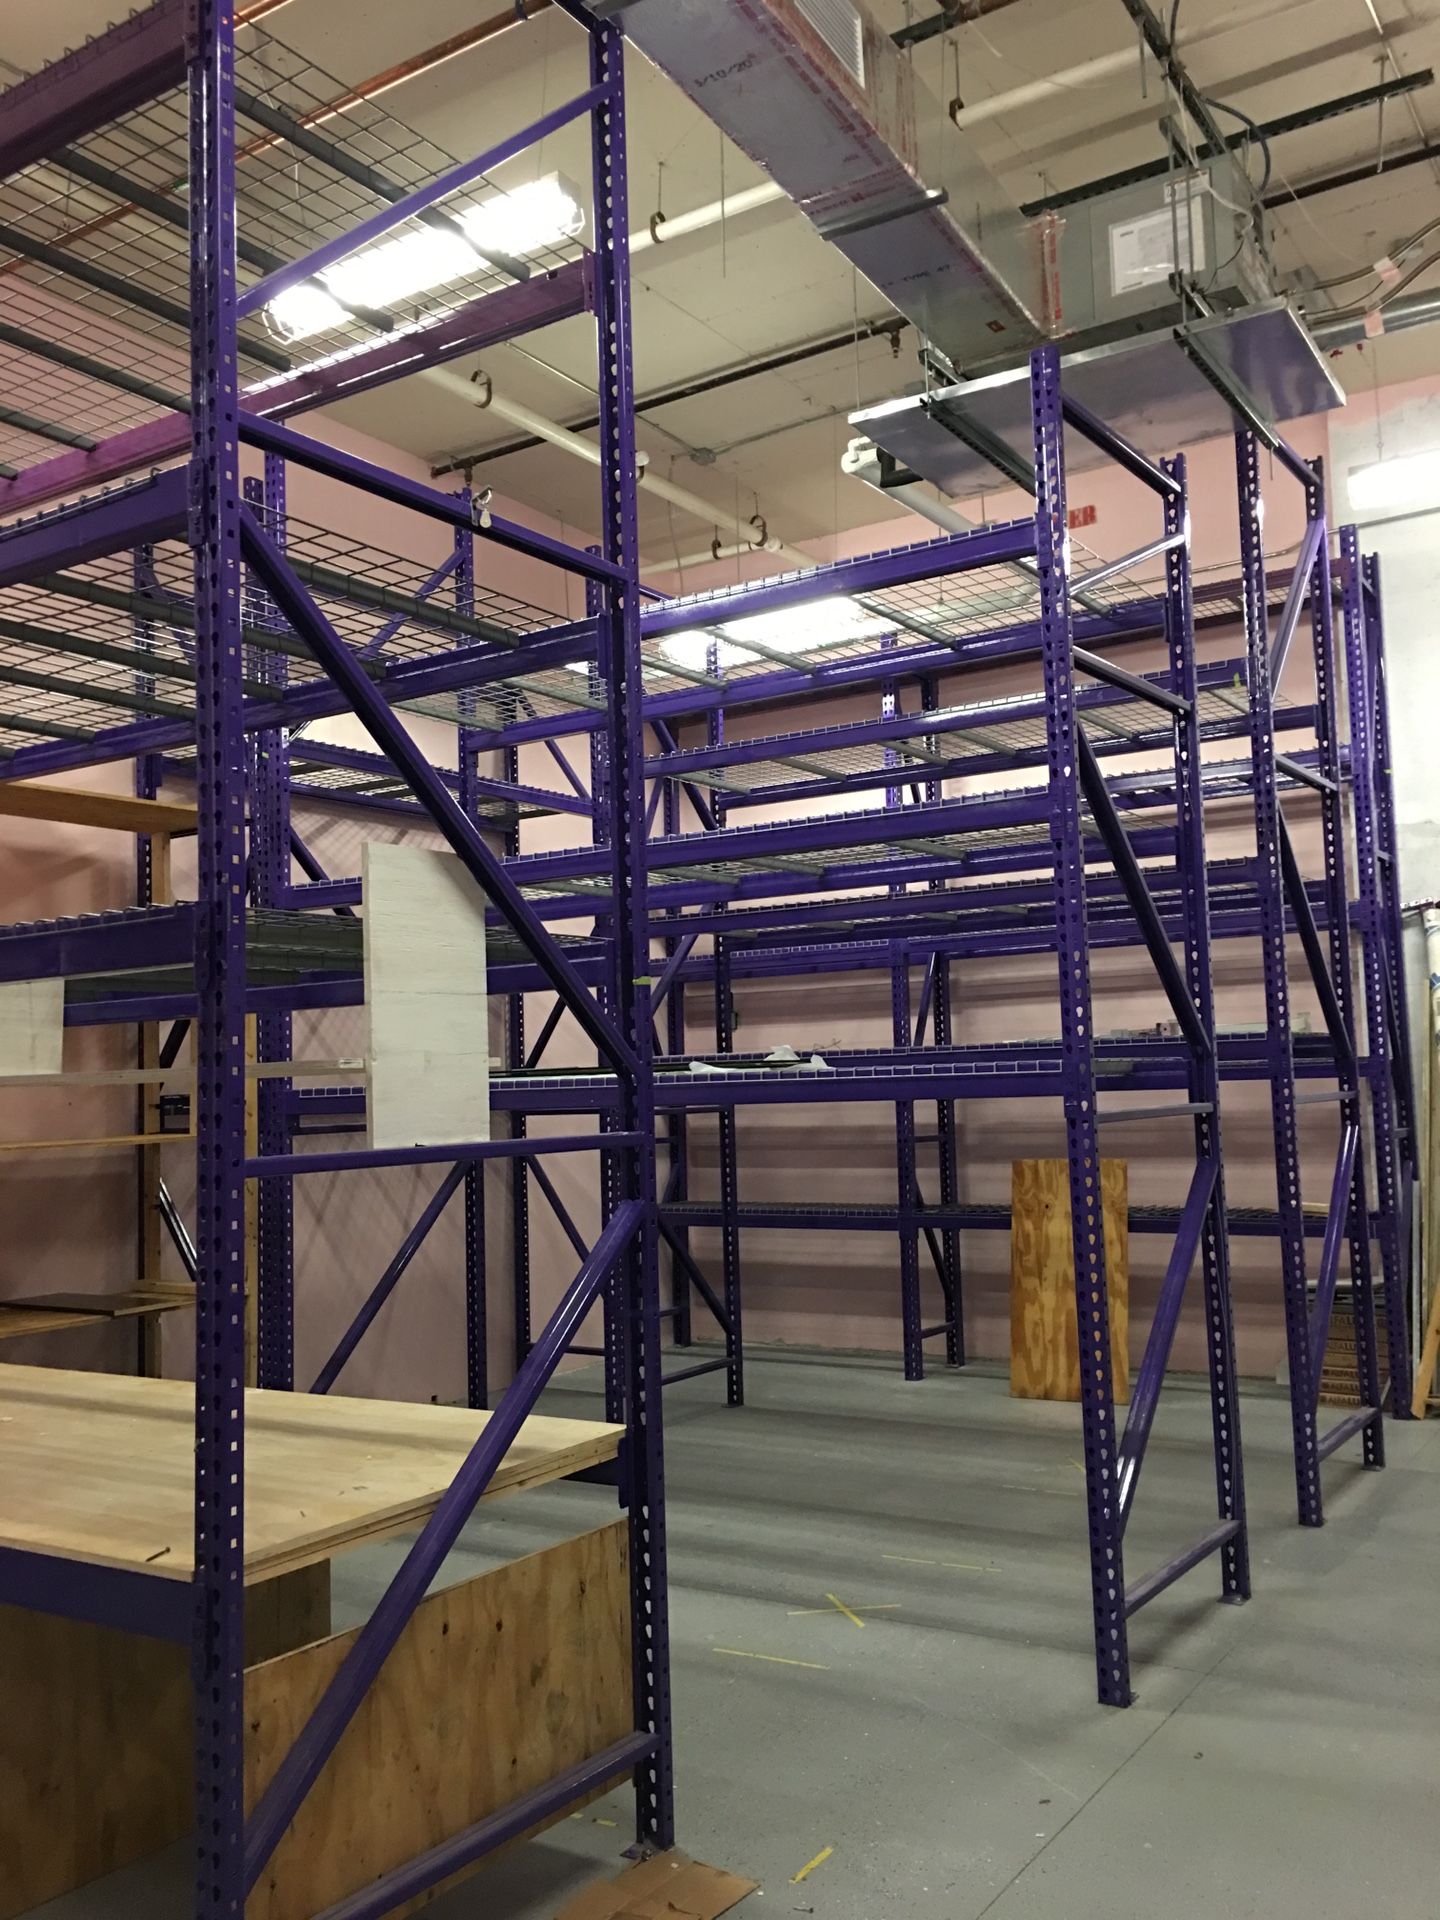 Warehouse 14 foot high Purple Metal Pallet Racks Storage Shelves for 1000 square feet space